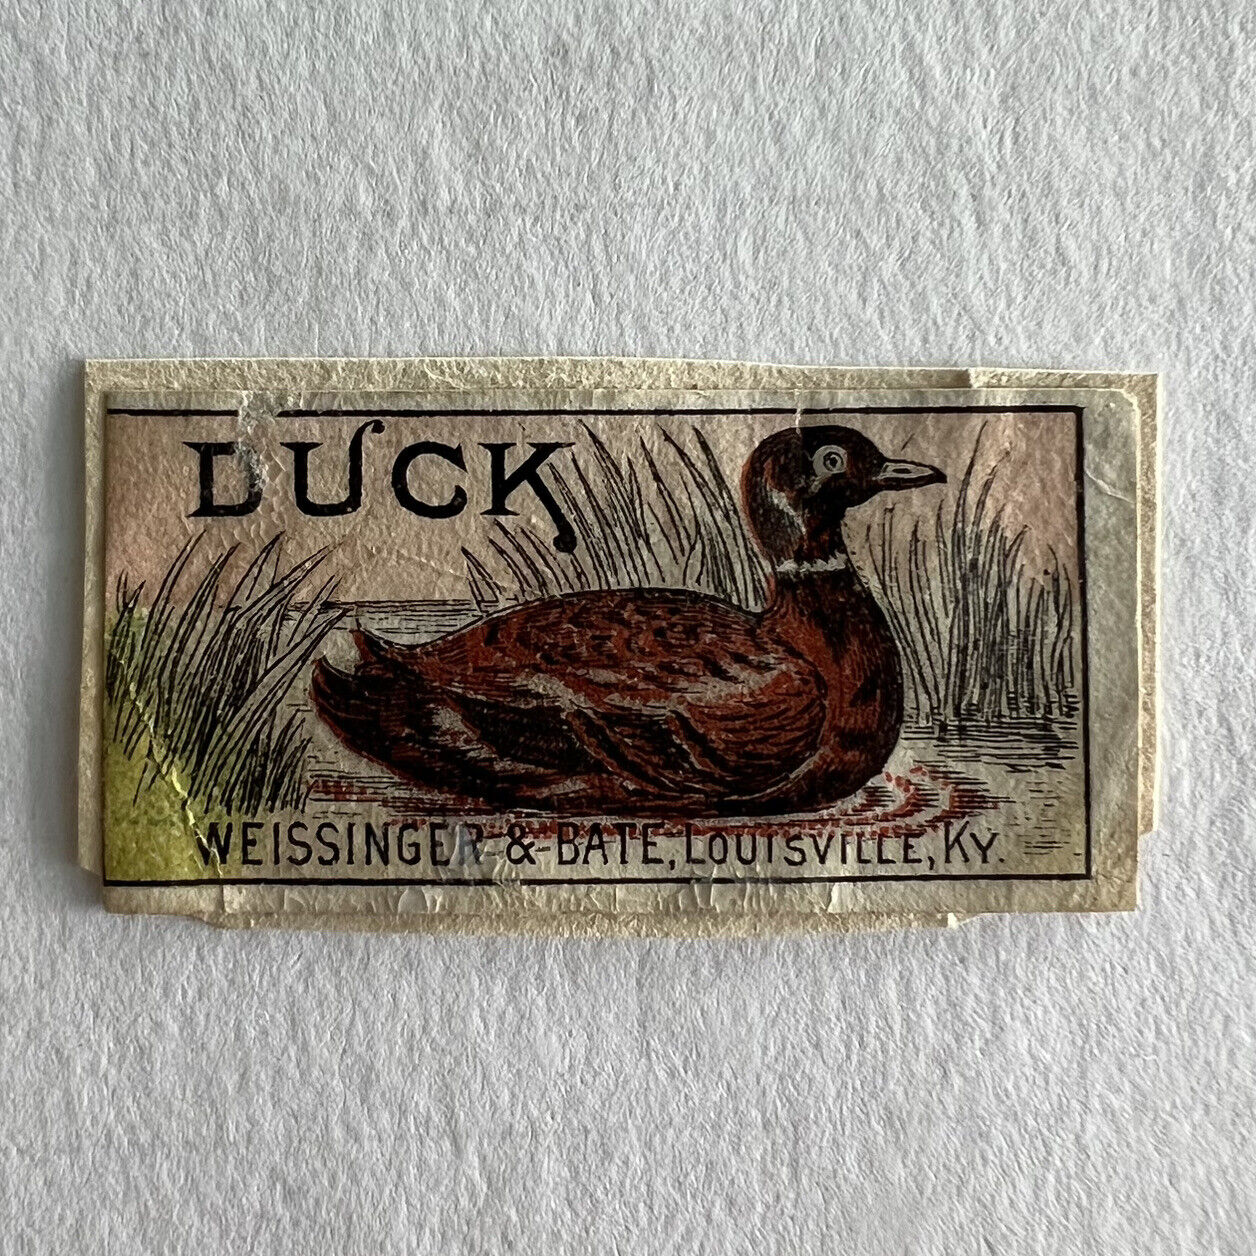 Victorian Era Advertising Paper Tobacco Duck Weissinger & Bate Louisville KY